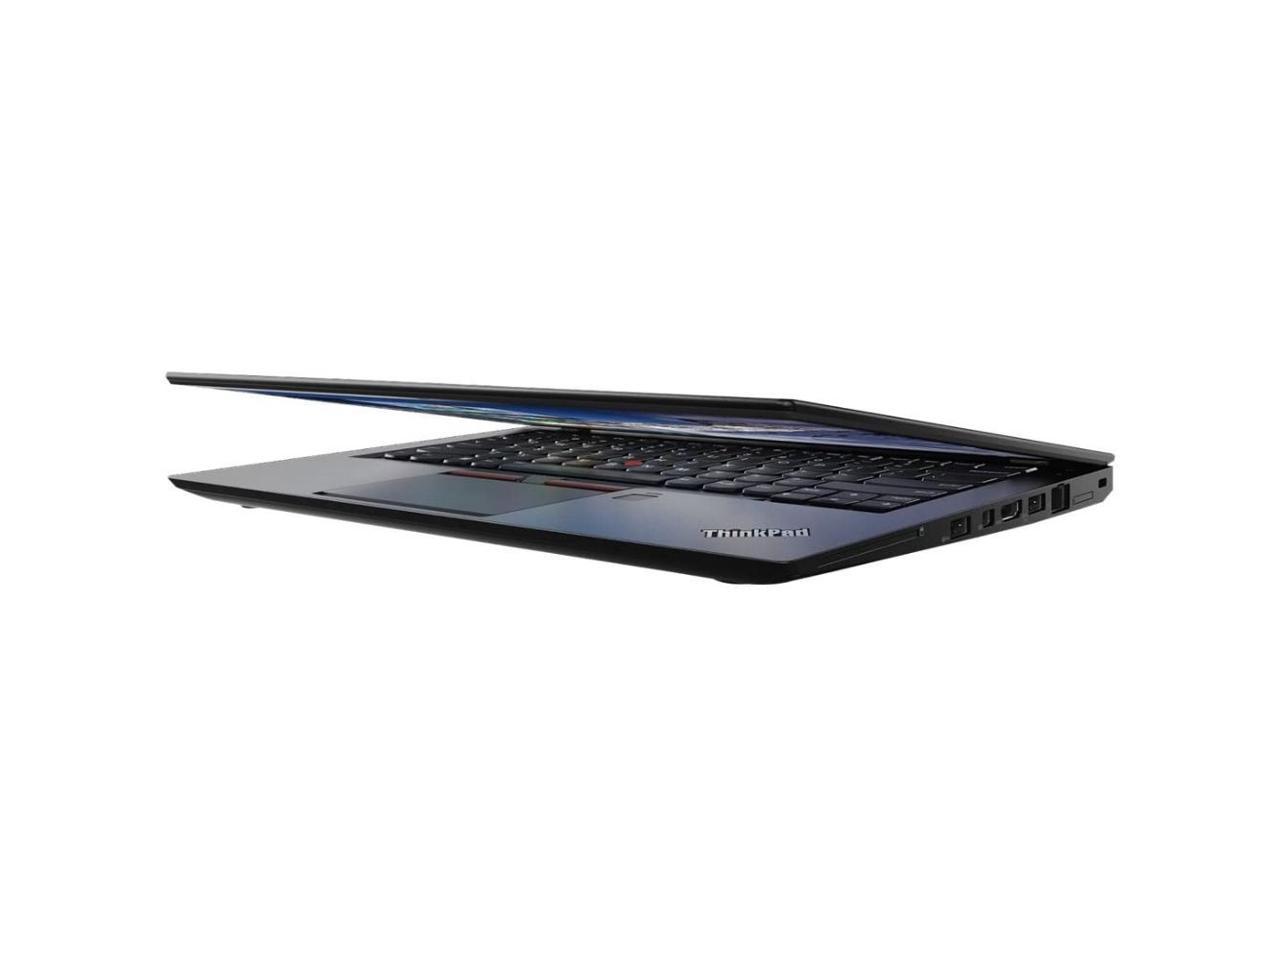 Lenovo ThinkPad T460 14.0-in Laptop - Intel Core i5 6300U 6th Gen 2.40 GHz 8GB 256GB SSD Windows 10 Pro 64-Bit - Webcam